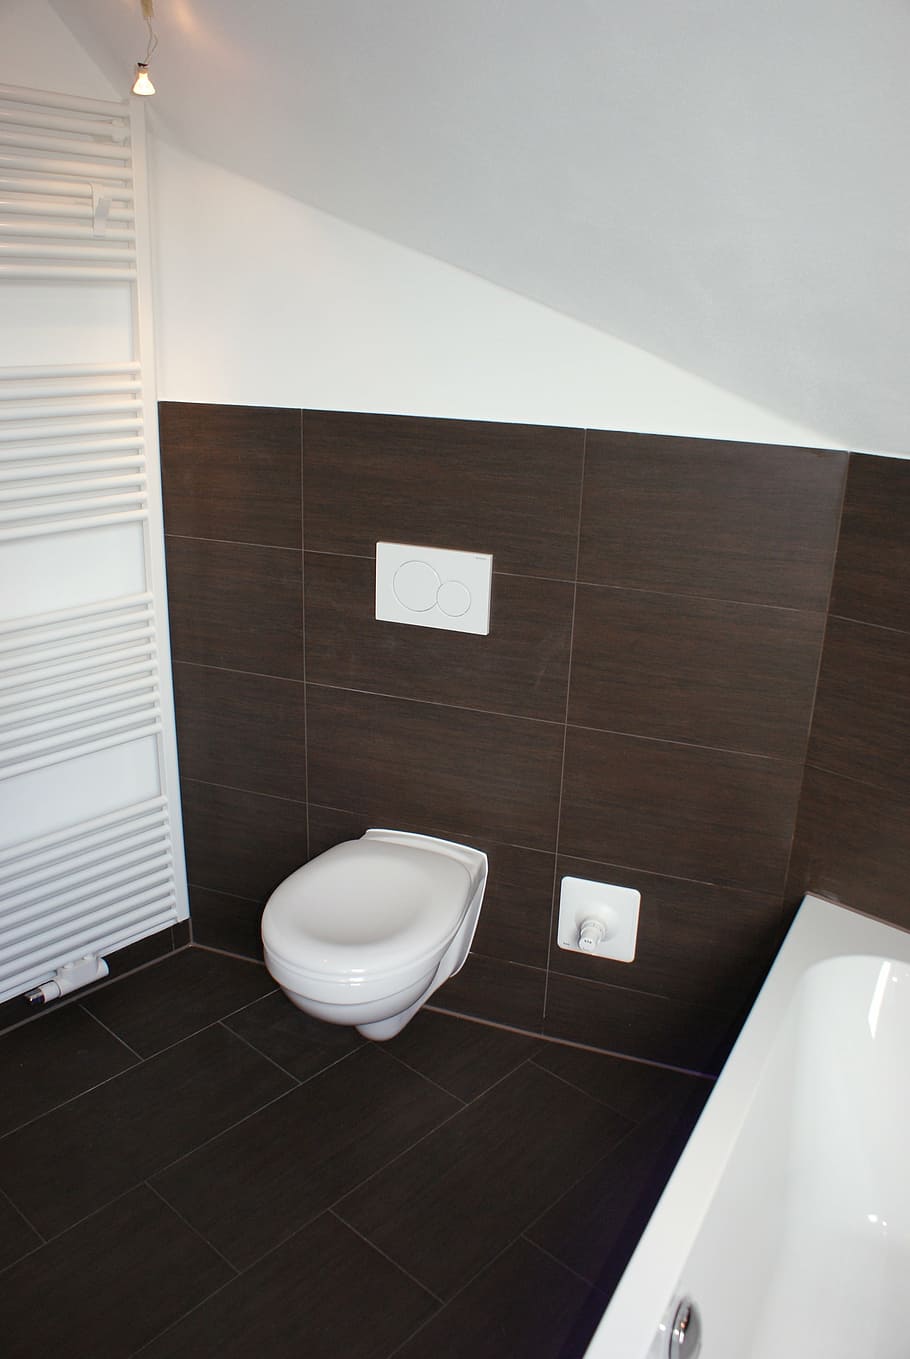 white water closet, toilet, wc, loo, bathroom, space, tiles, bad, HD wallpaper